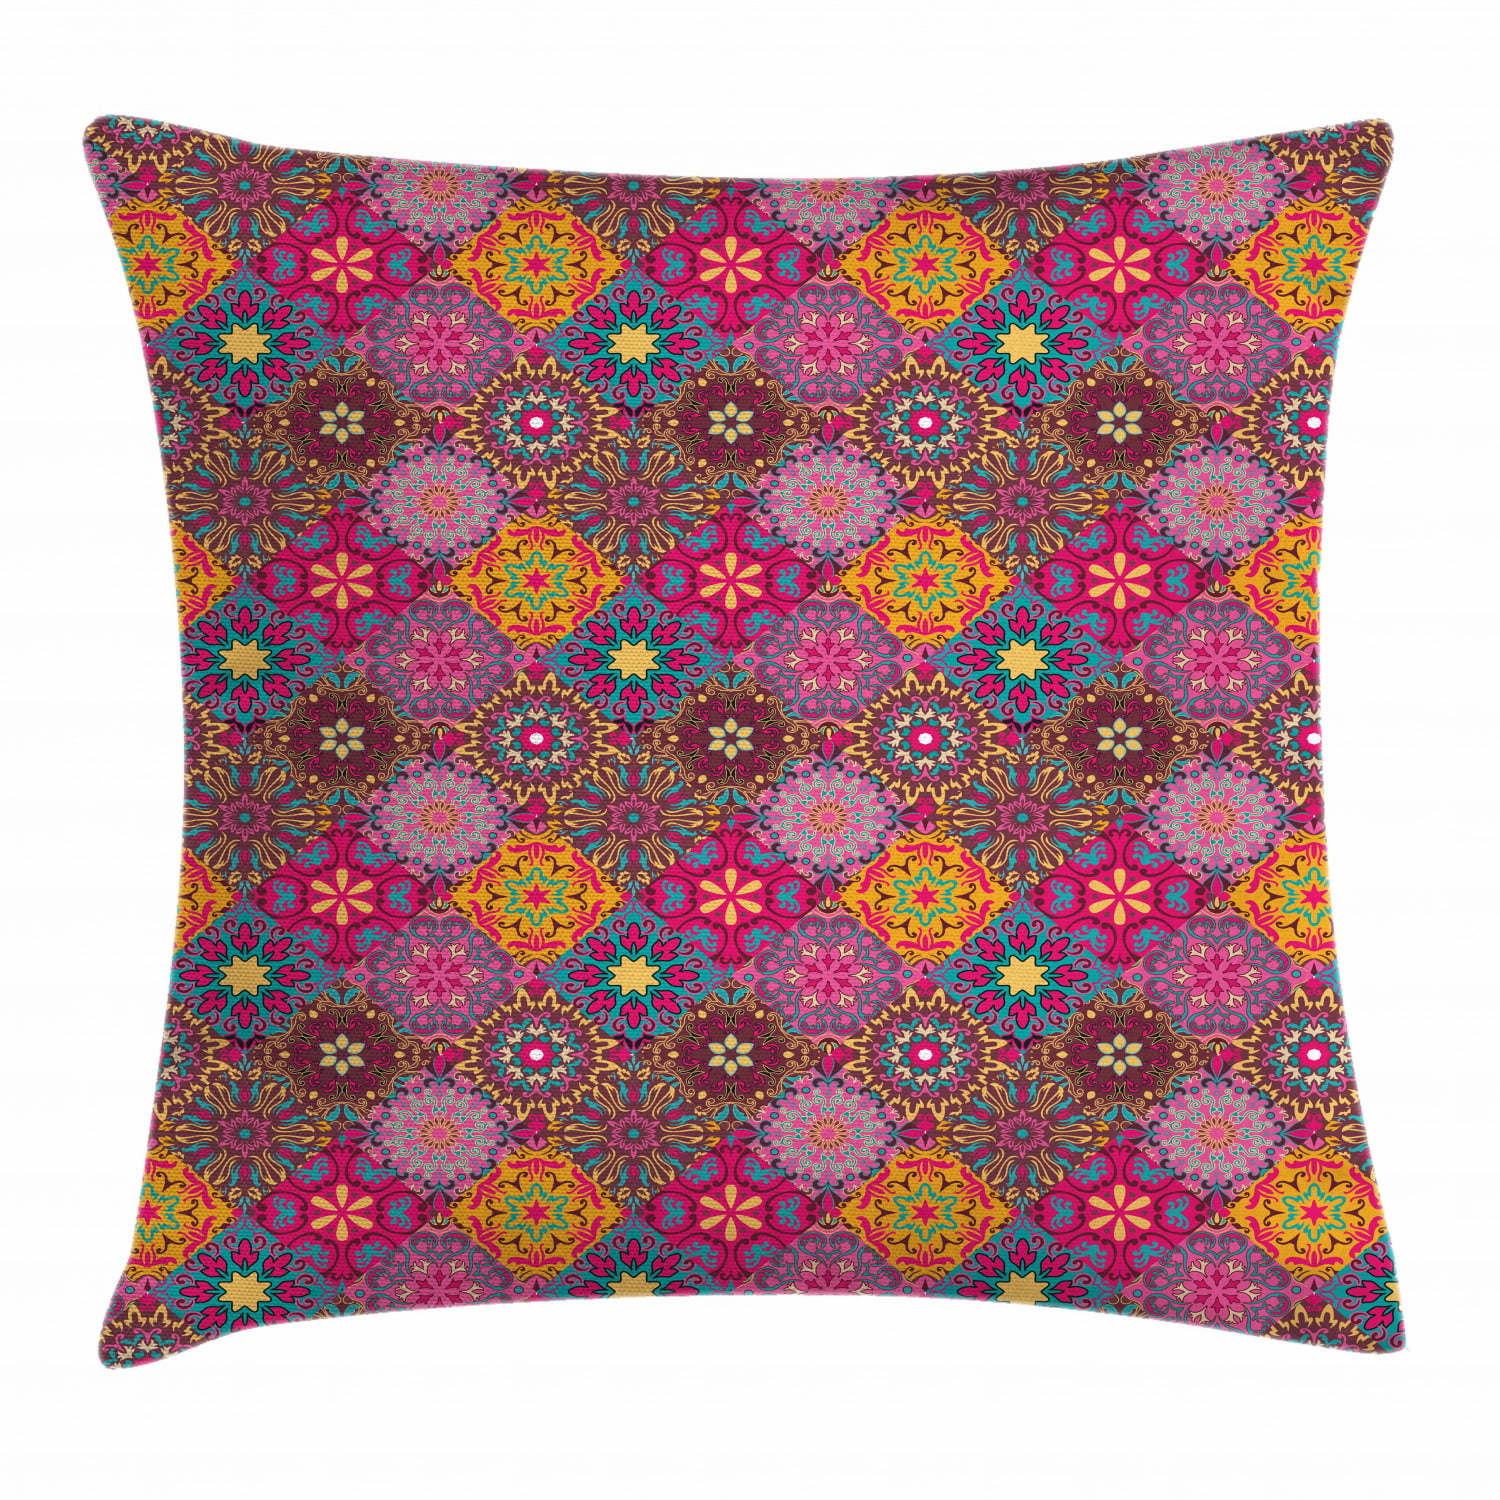 Moroccan Throw Pillow Cushion Cover, Vibrant Artistic Mandala Motifs in ...